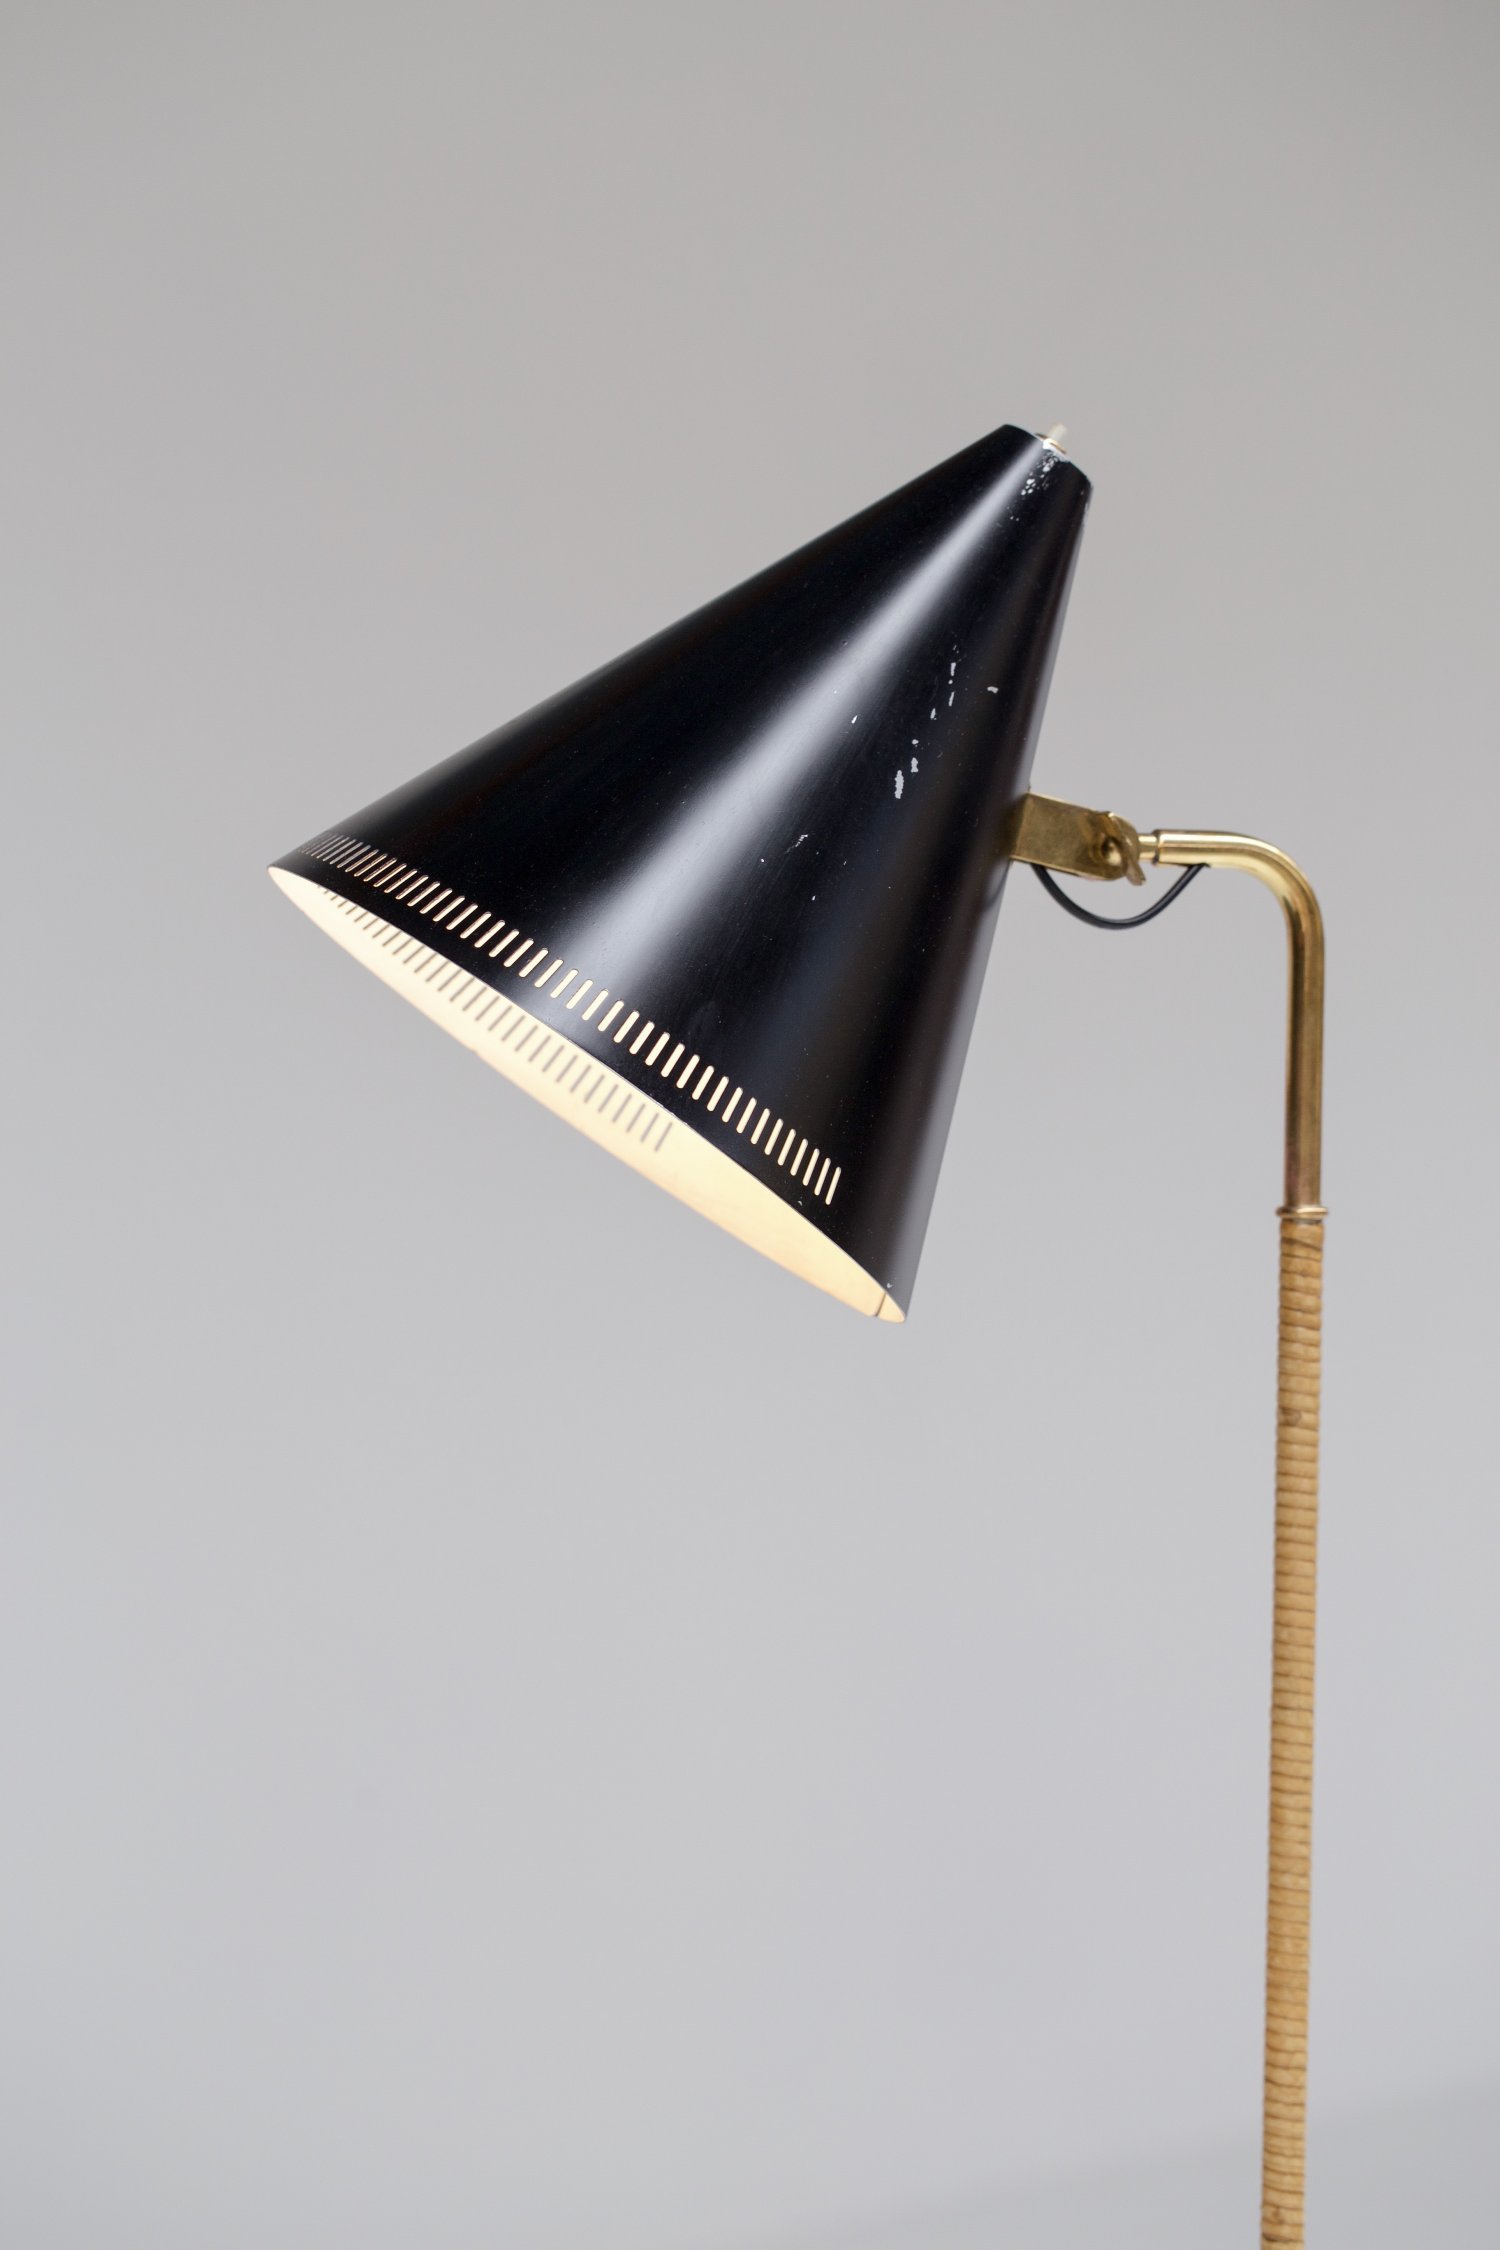 Paavo Tynell floorlamp by Idman